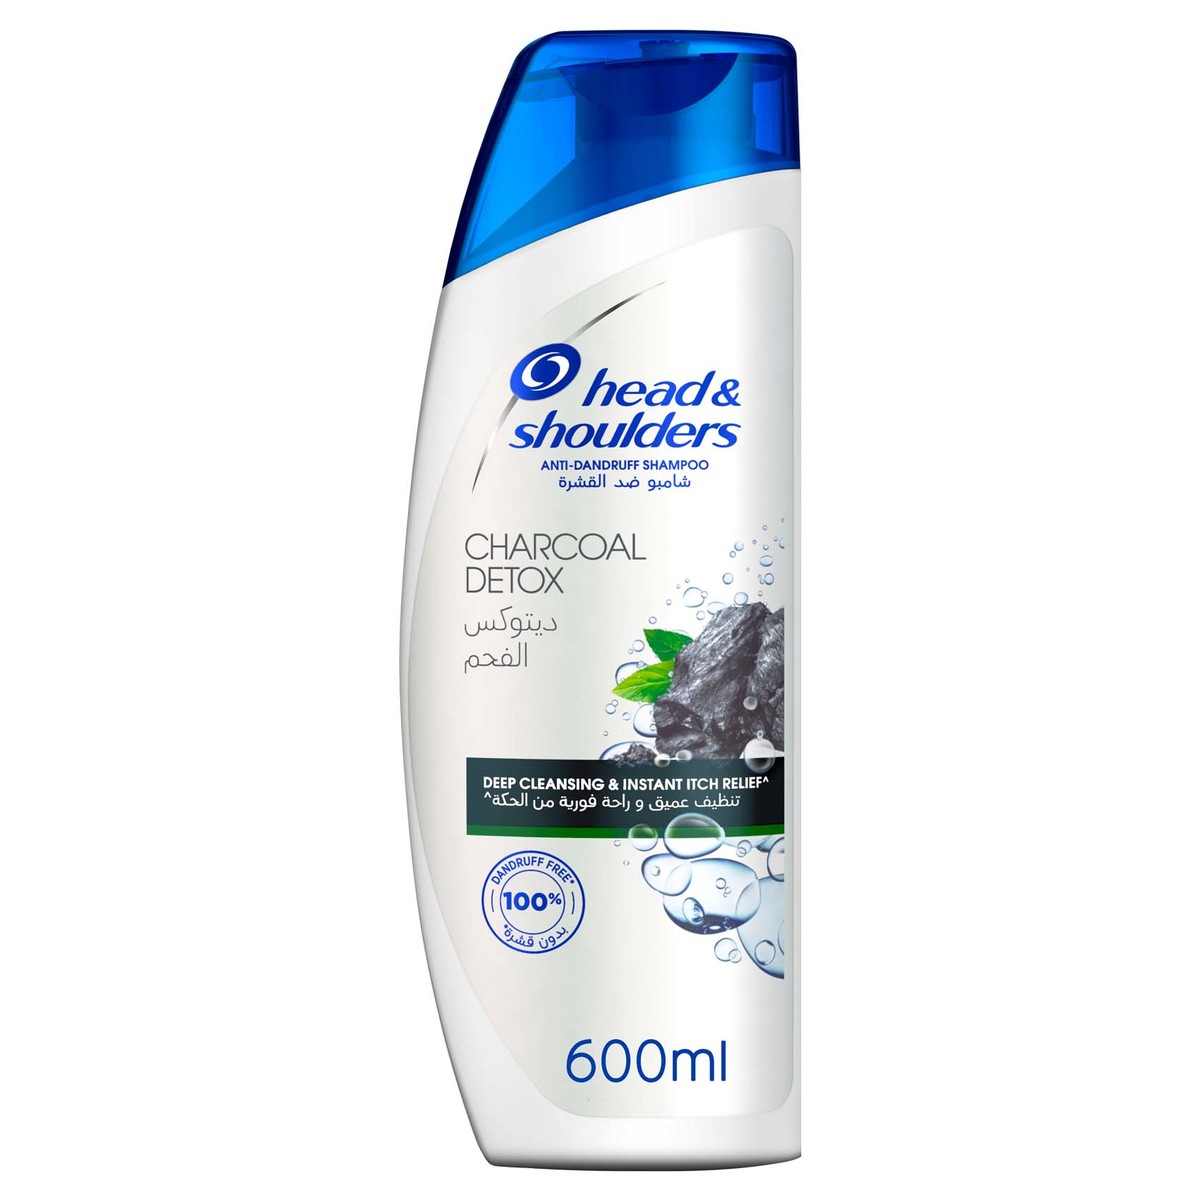 Head & Shoulders Charcoal Detox Anti Dandruff Shampoo 600ml